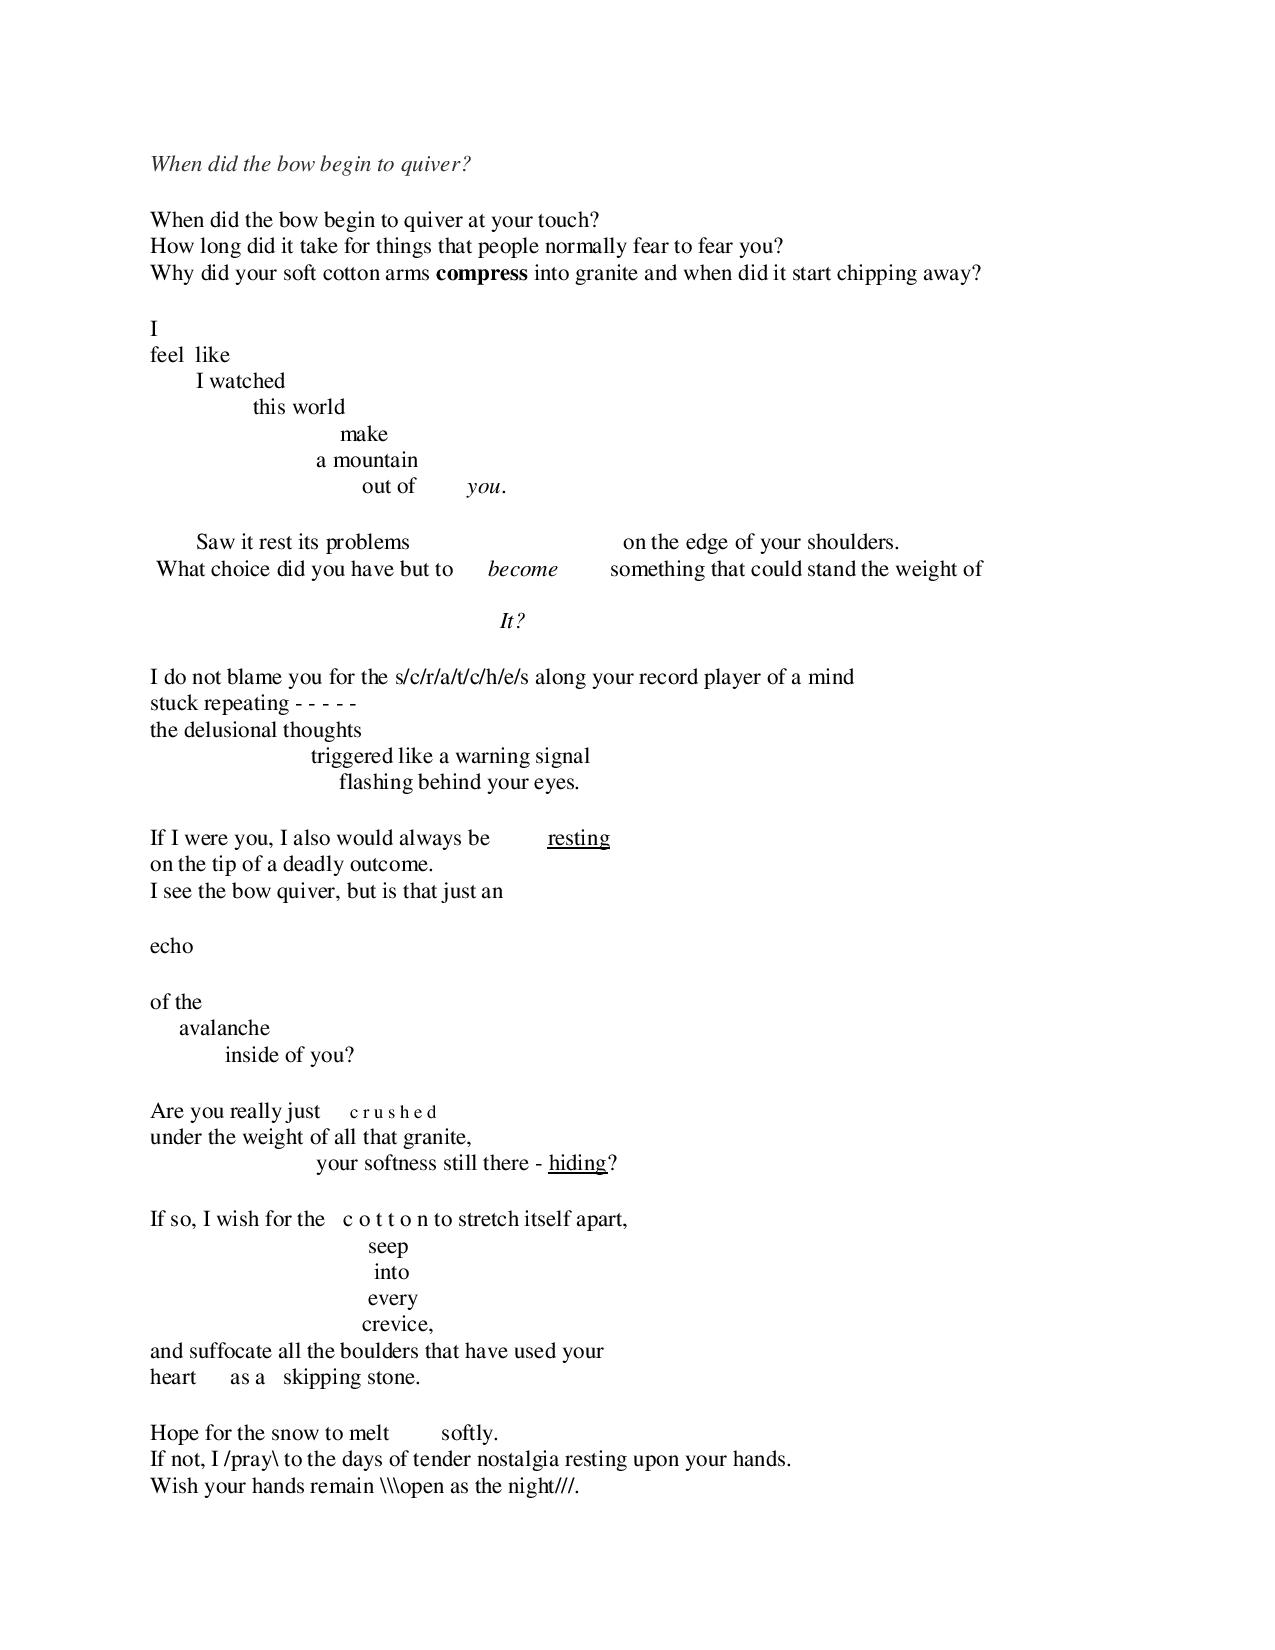 Formatted poem by SHerdes Leona